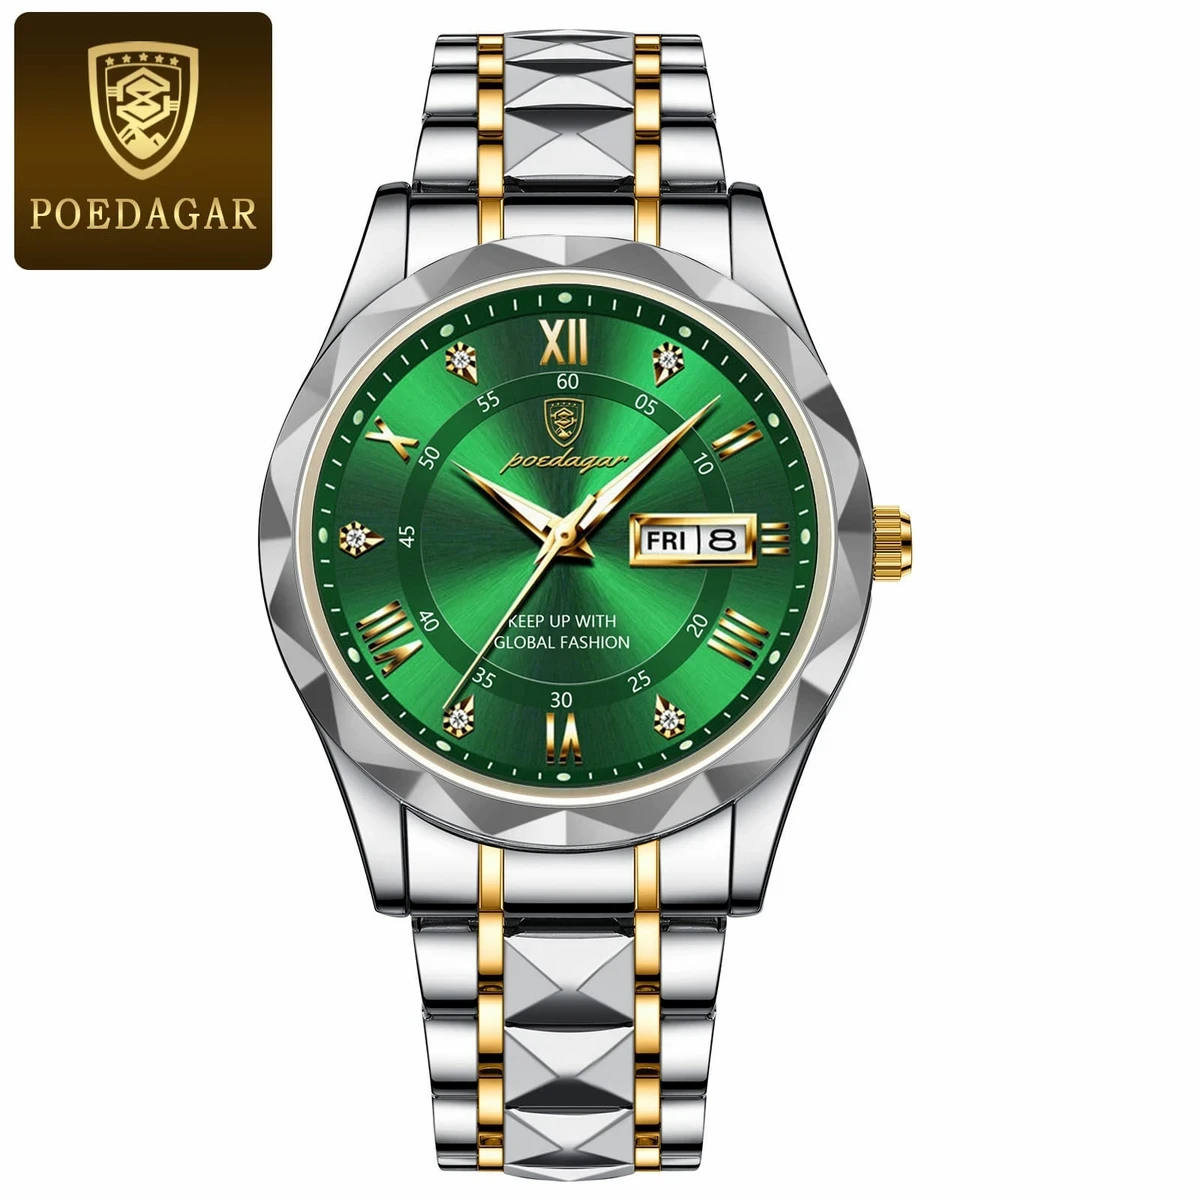 POEDAGAR Luxury Men Watches Business Top Brand Man Wristwatch - Luminous Date Week Quartz Men's Watch High Quality+Box - POEDAGAR MODEL 615 WATCH Toton ar Dial Green